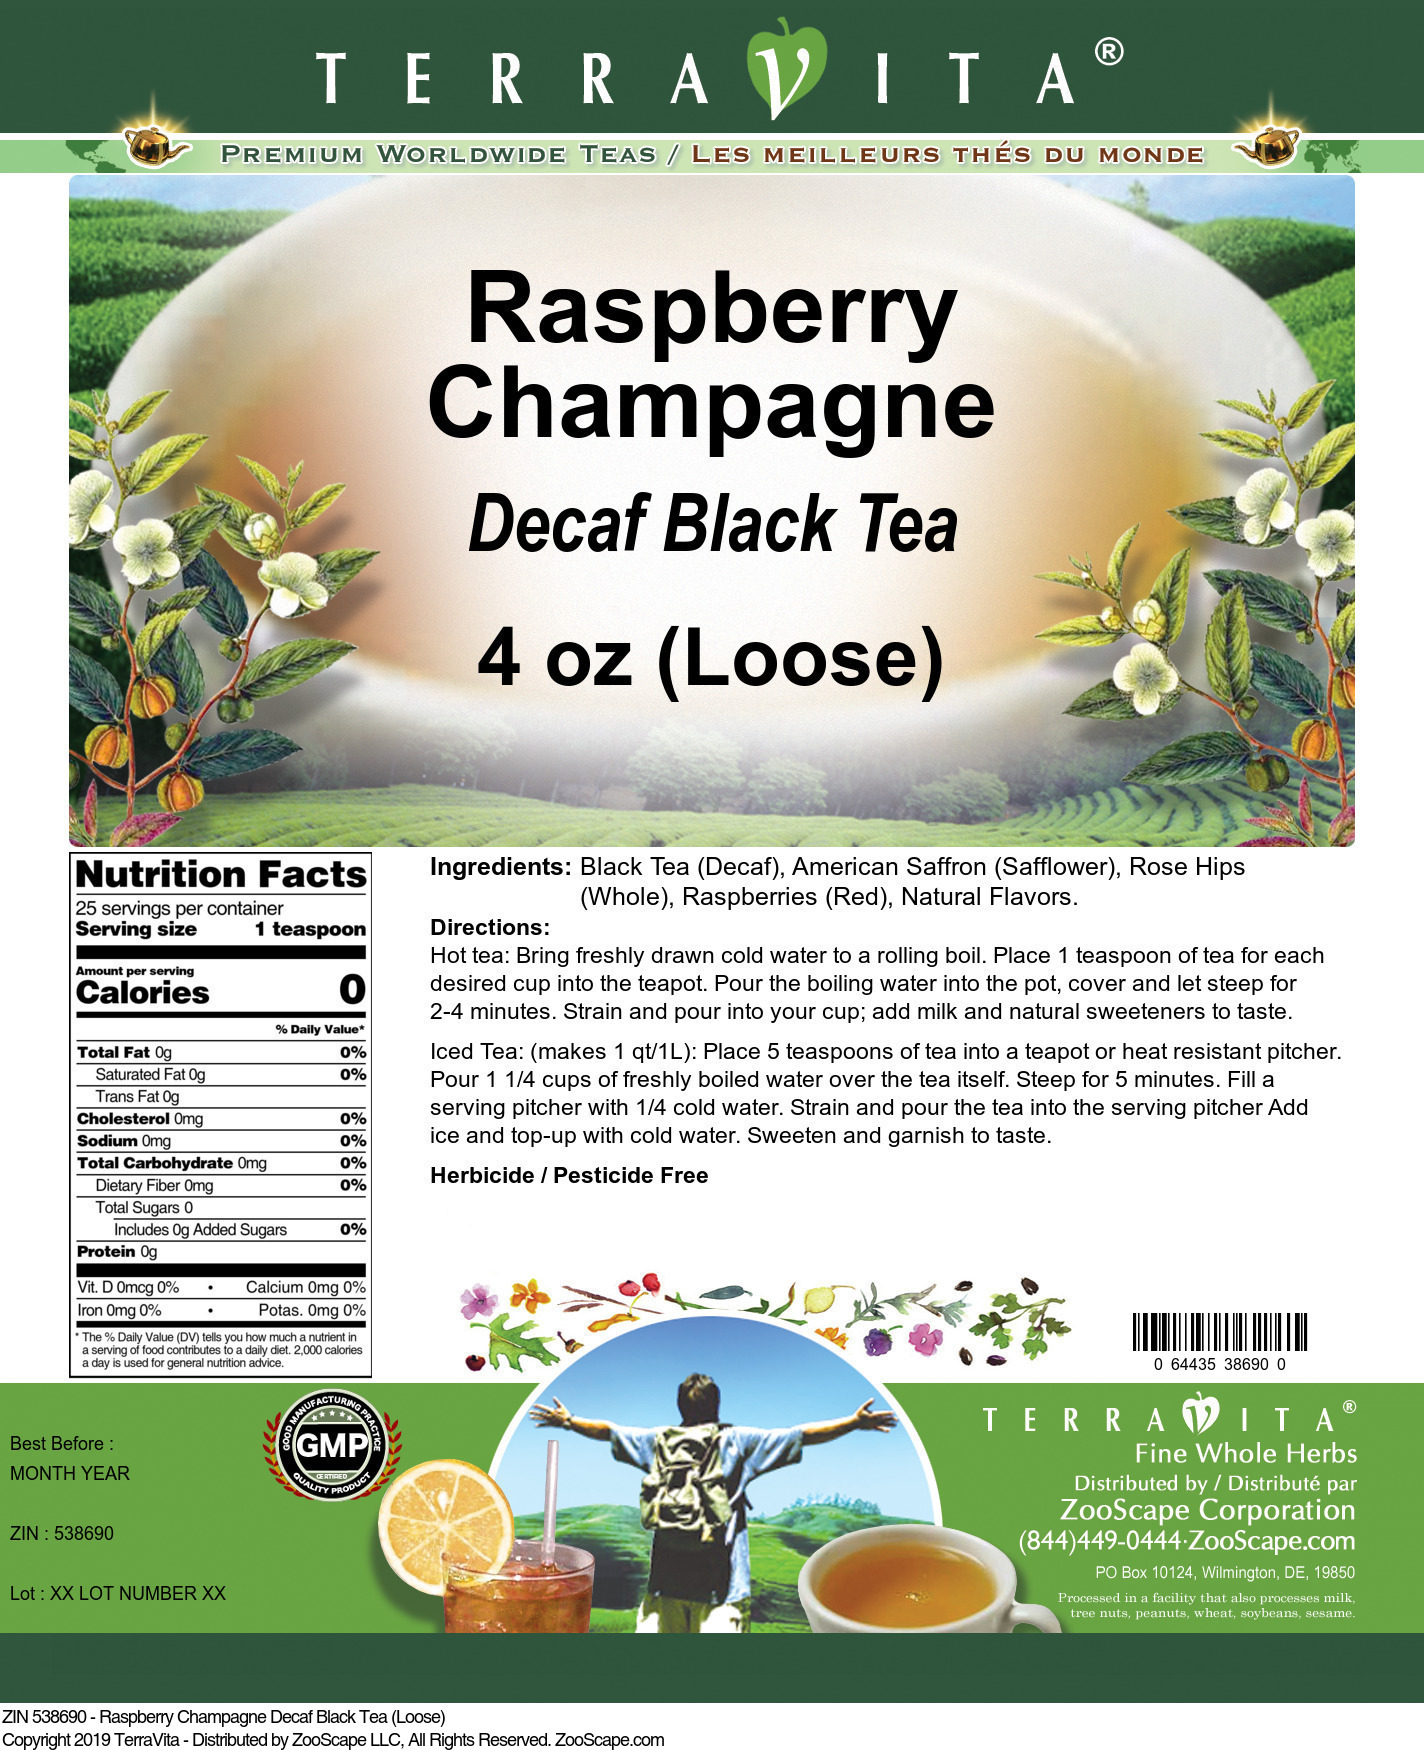 Raspberry Champagne Decaf Black Tea (Loose) - Label